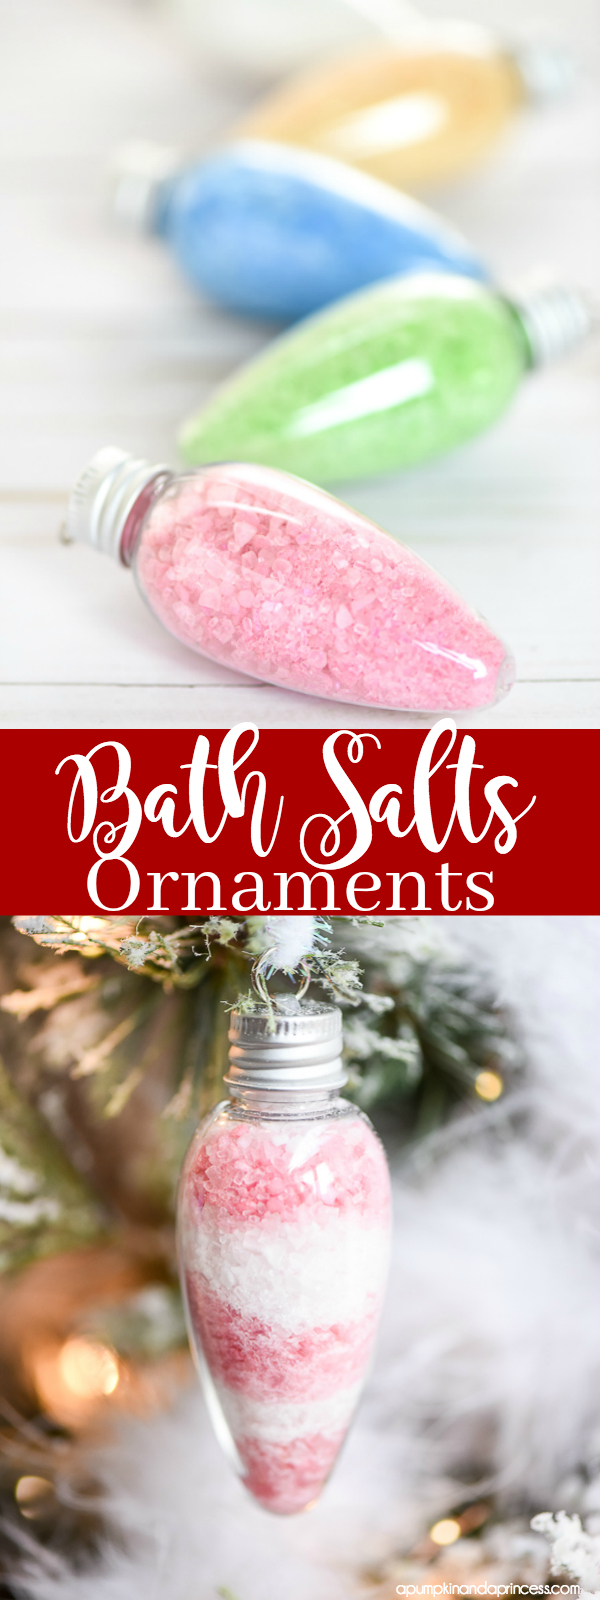 Bath-Salts-Ornaments